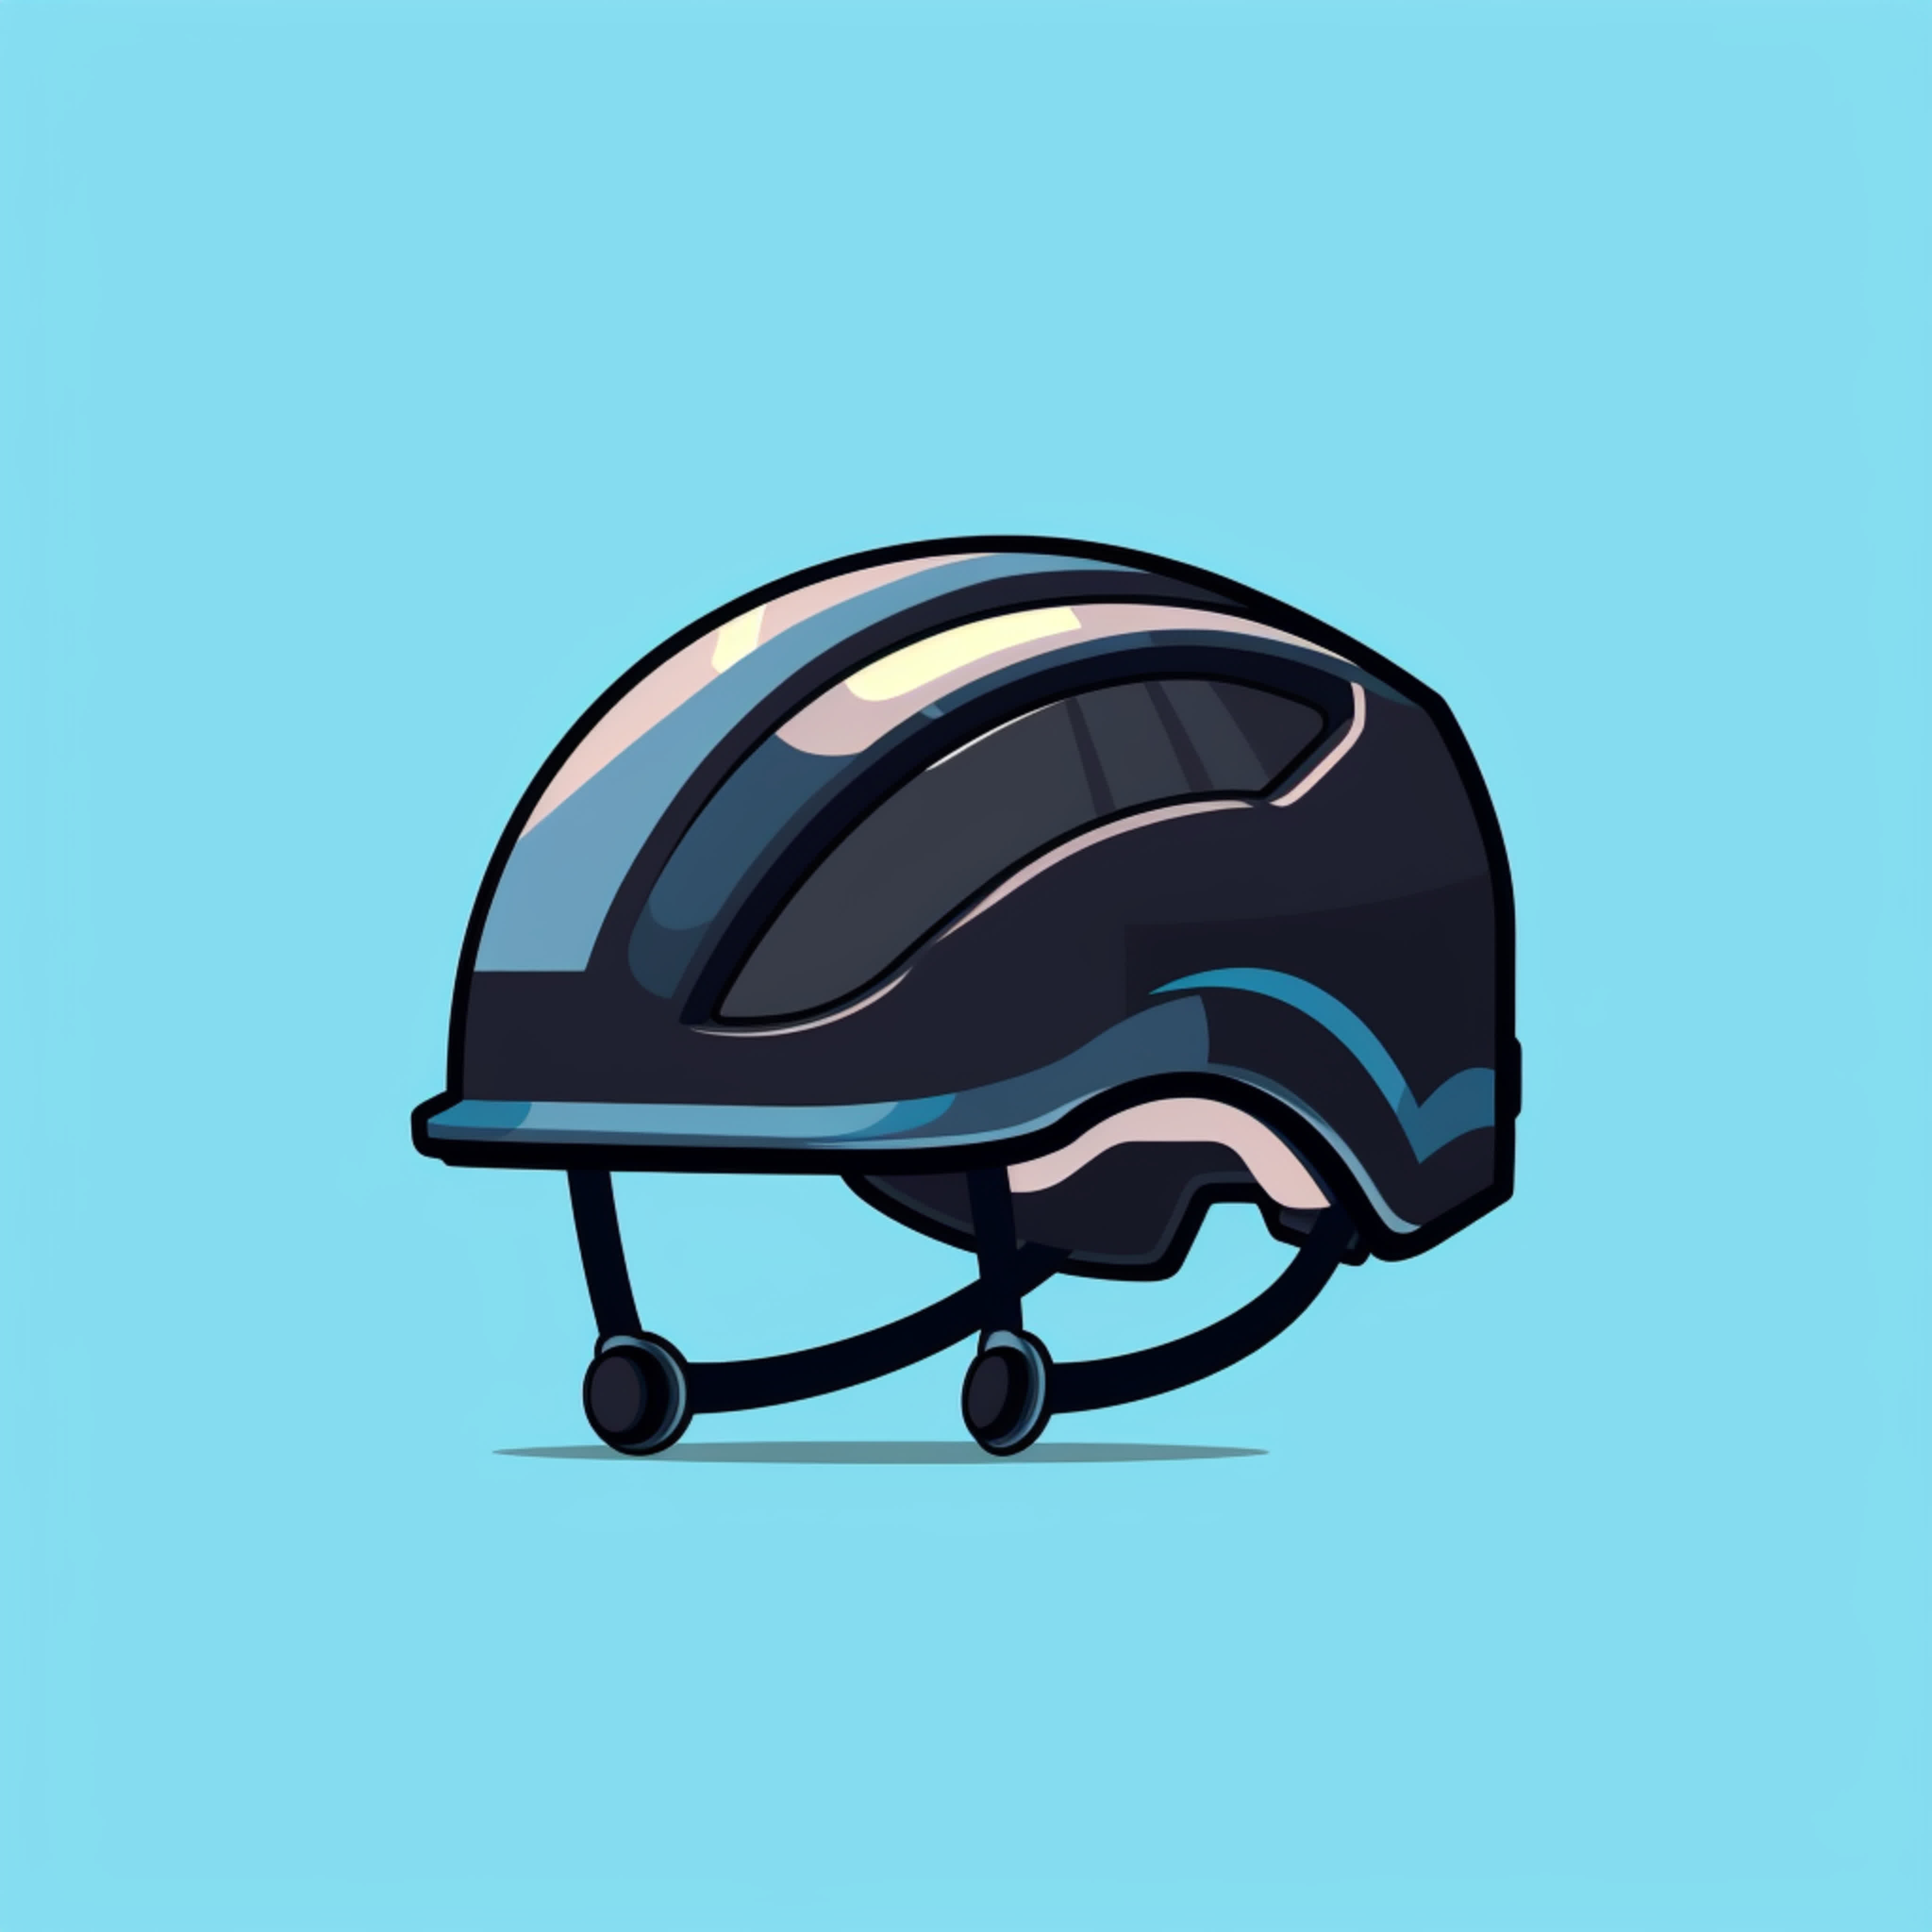 v3ri4 m4i m41nd minimalistic 2d cycling helmet icon cbd8a380 99ad 4a0b 84ff 012b05c973b4 612